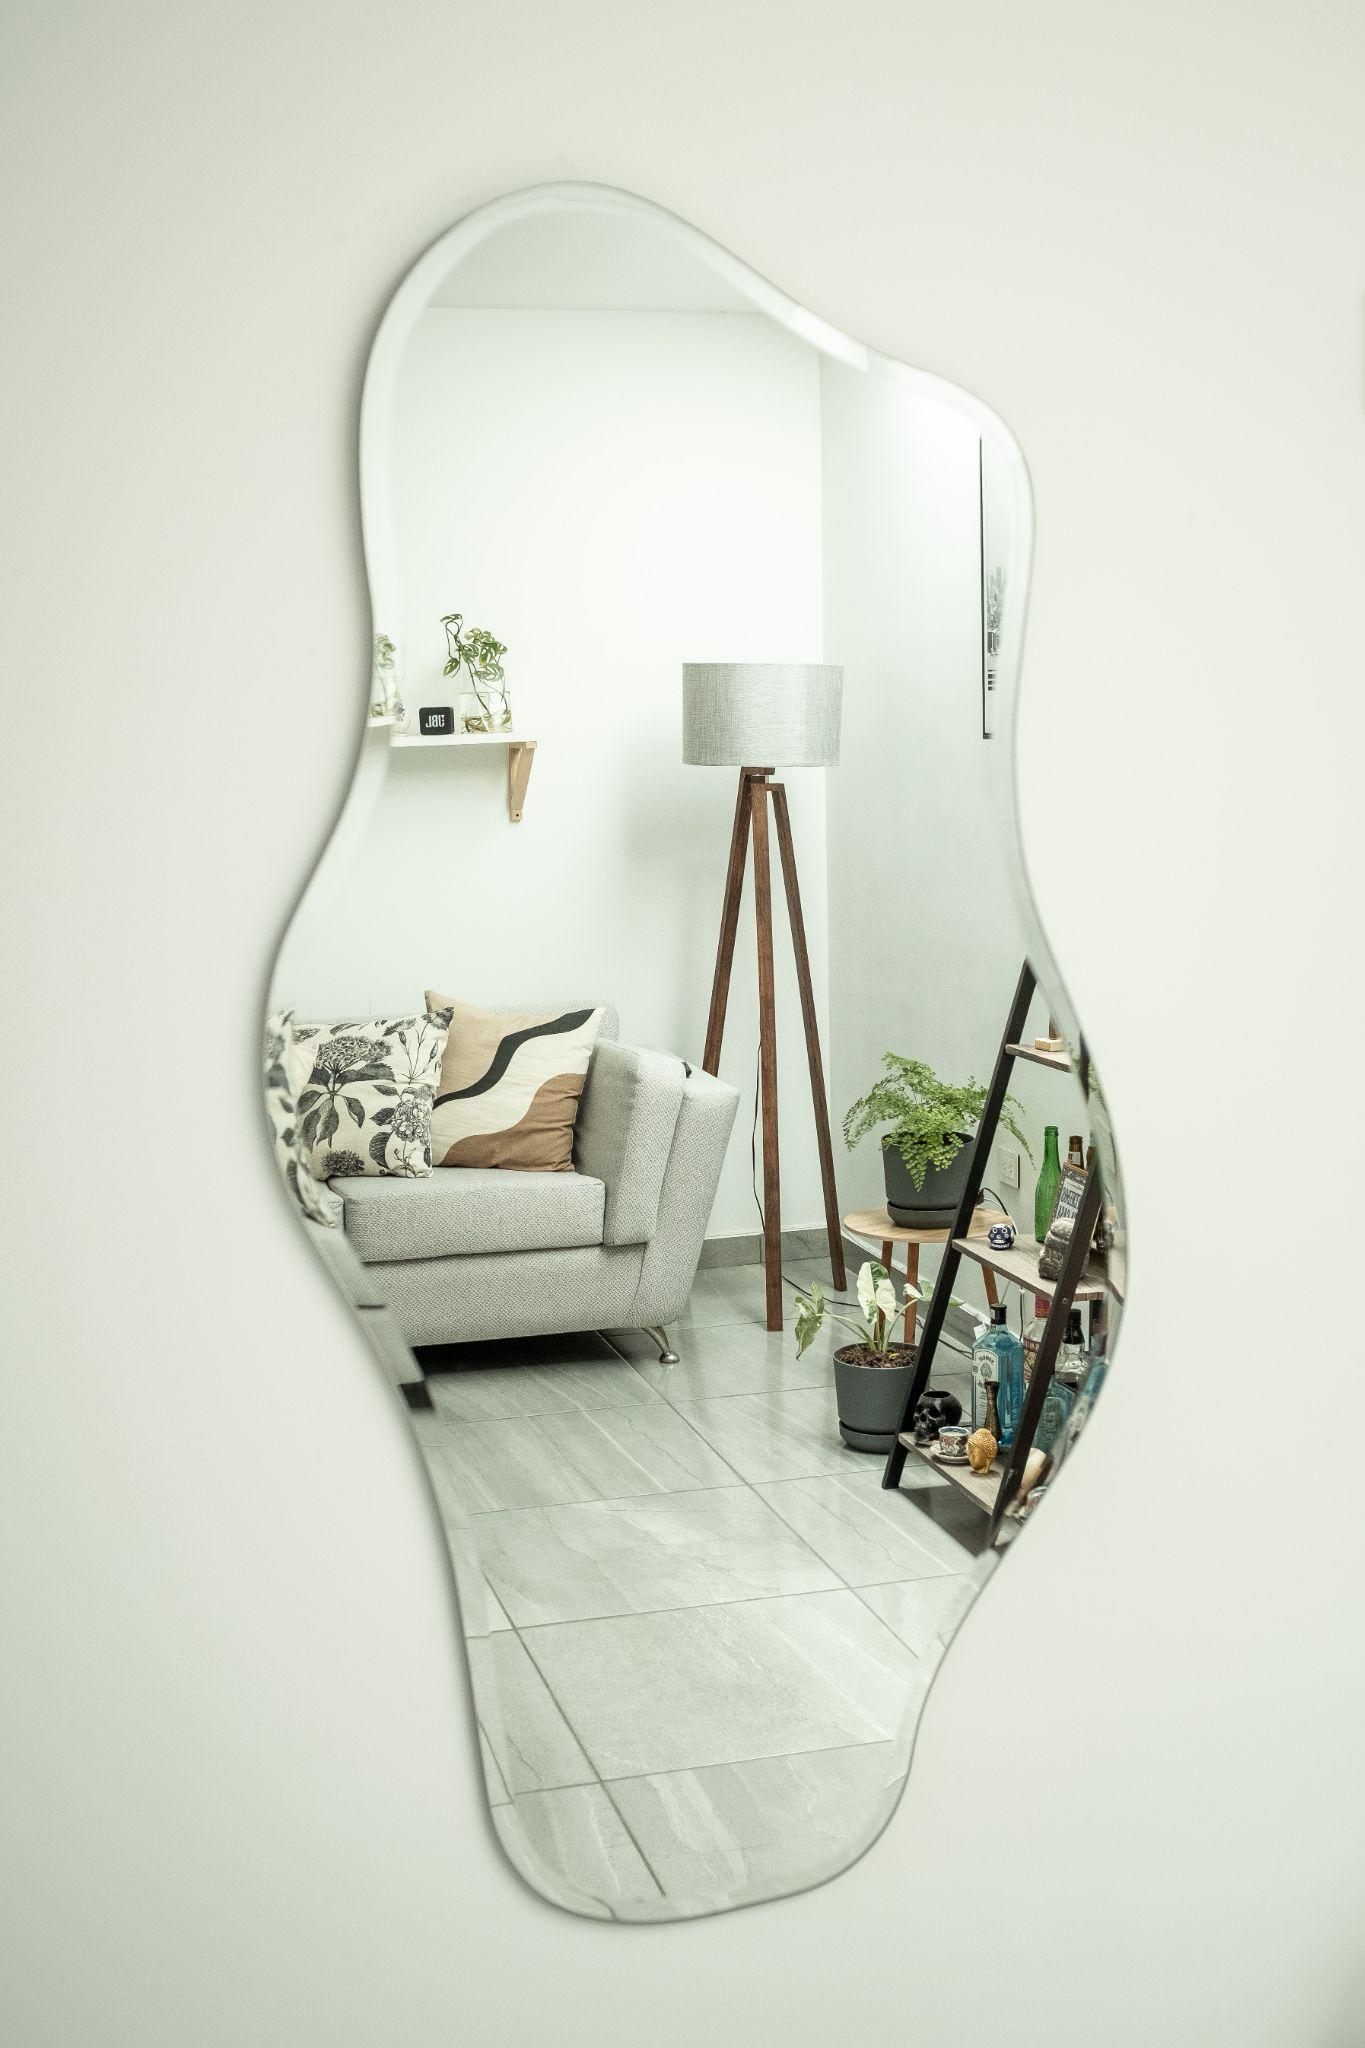  Mirrors in home decor